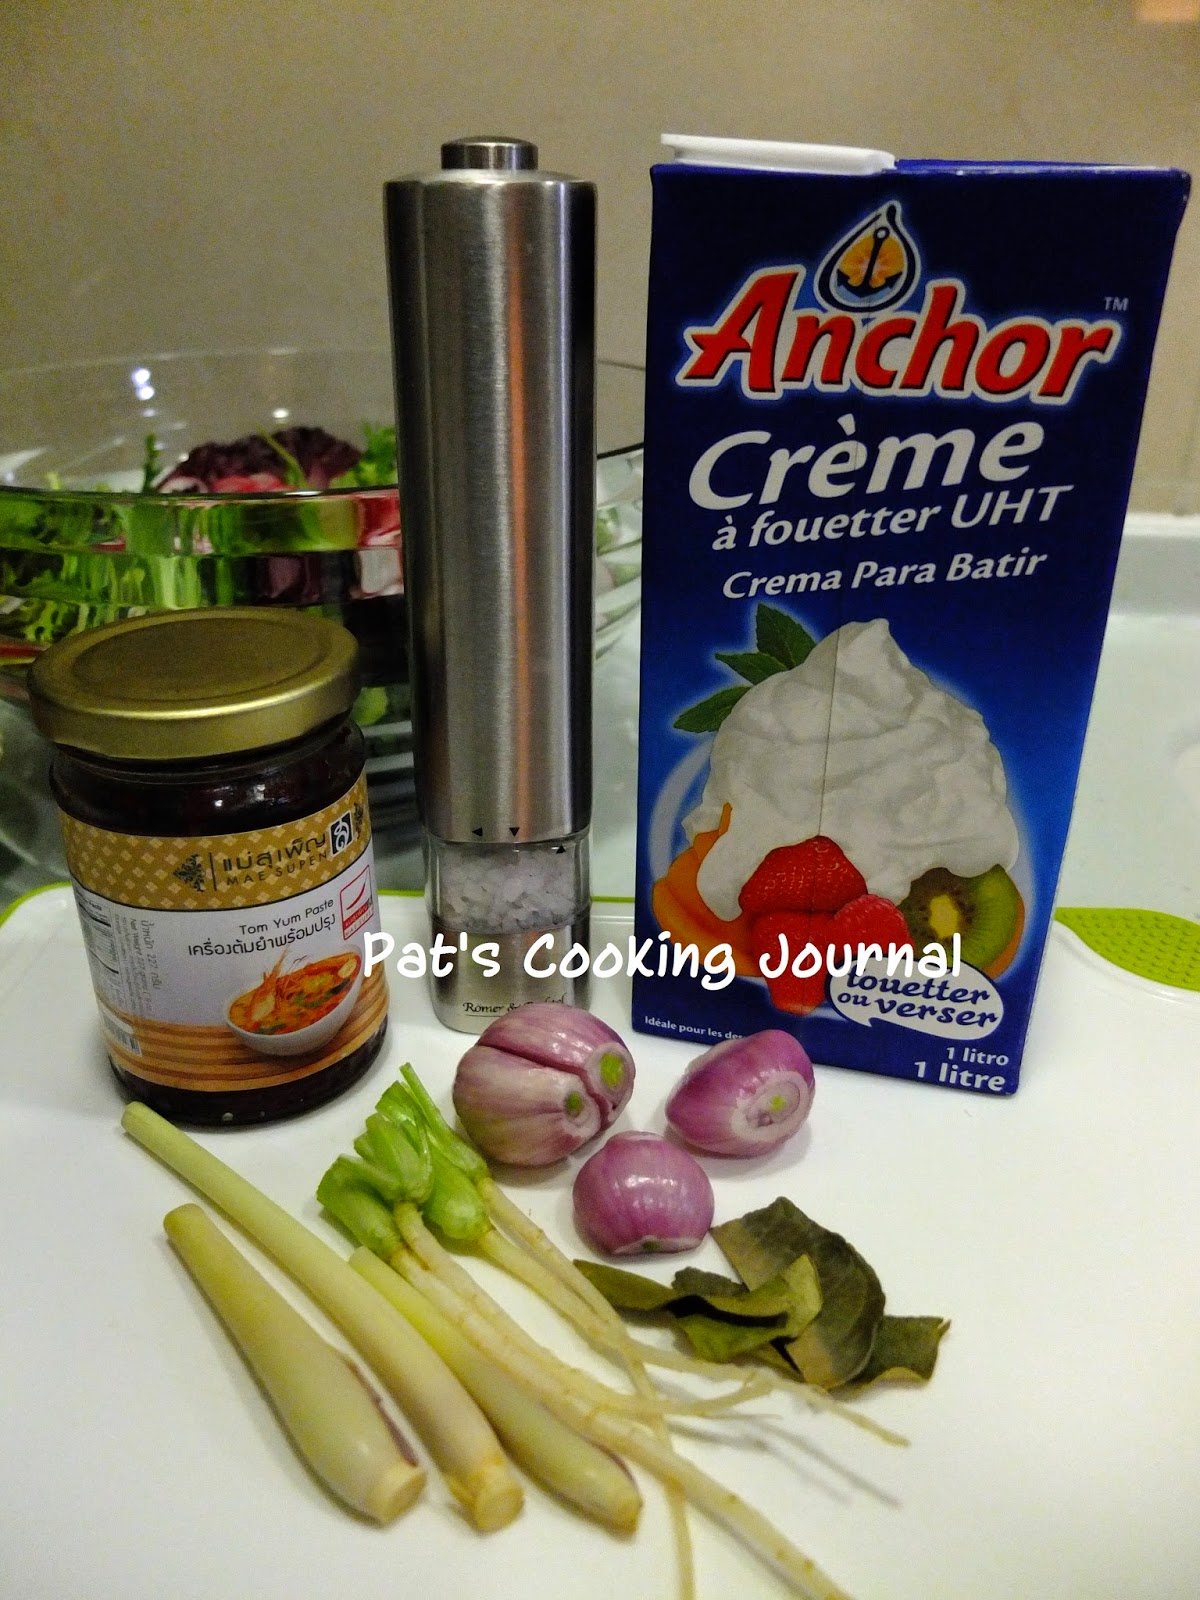 Pat's Baking & Cooking Journal PP的烹飪· 烘培· 逸誌: Australian Blue Mussels in  Creamy Tom Yum Sauce (冬陰公忌廉汁煮澳洲藍青口)